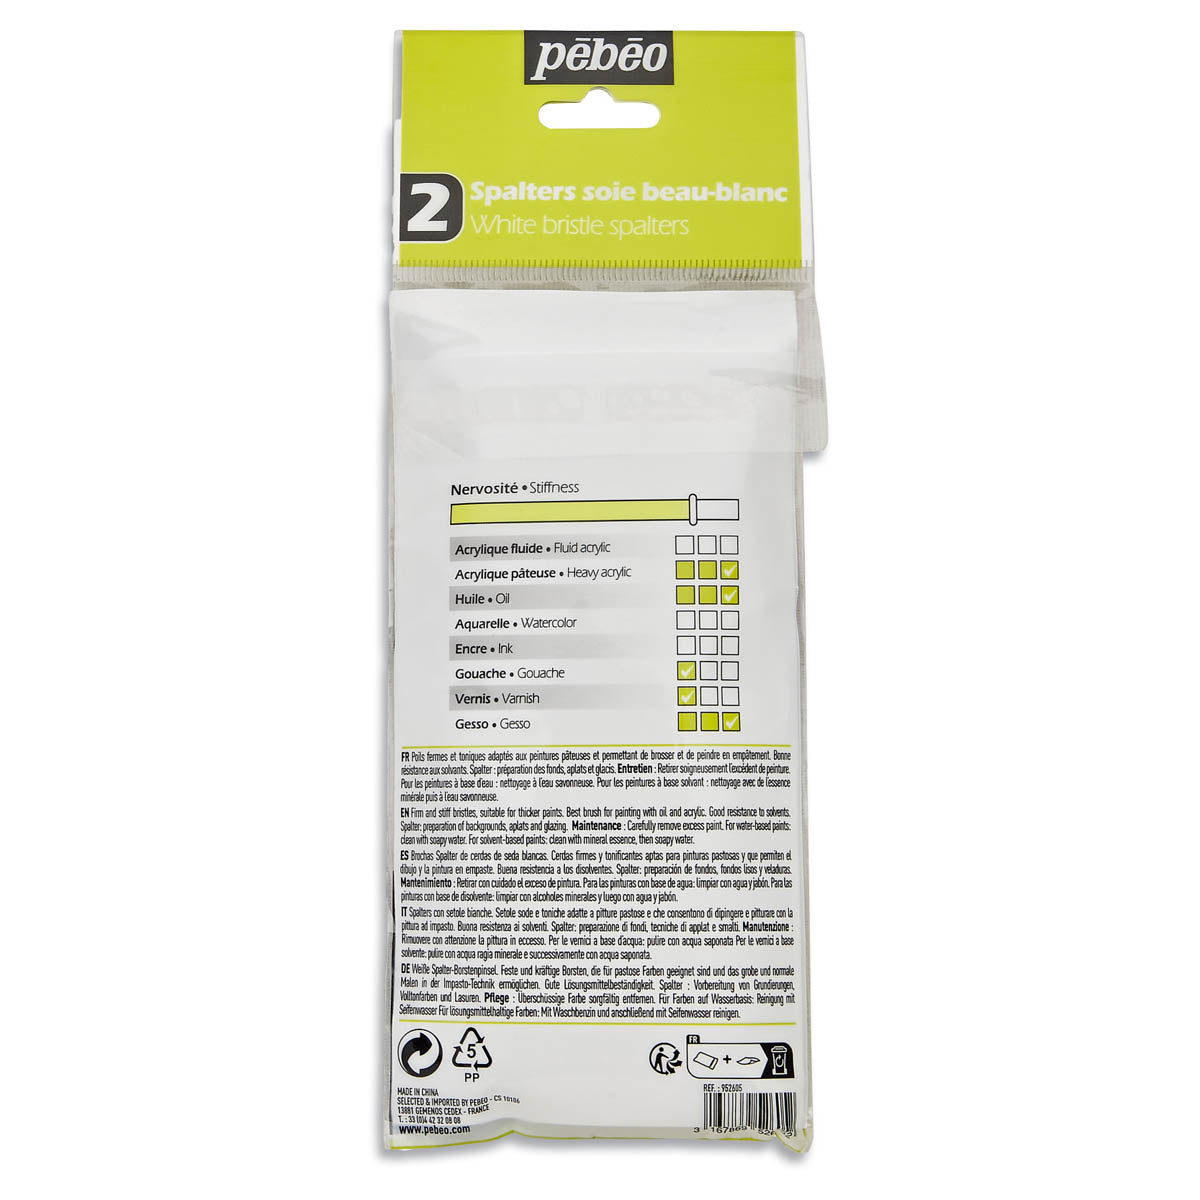 Pebeo - Acryl- en olieborstelset - 2x Spalter Extra Short Pure White borstel